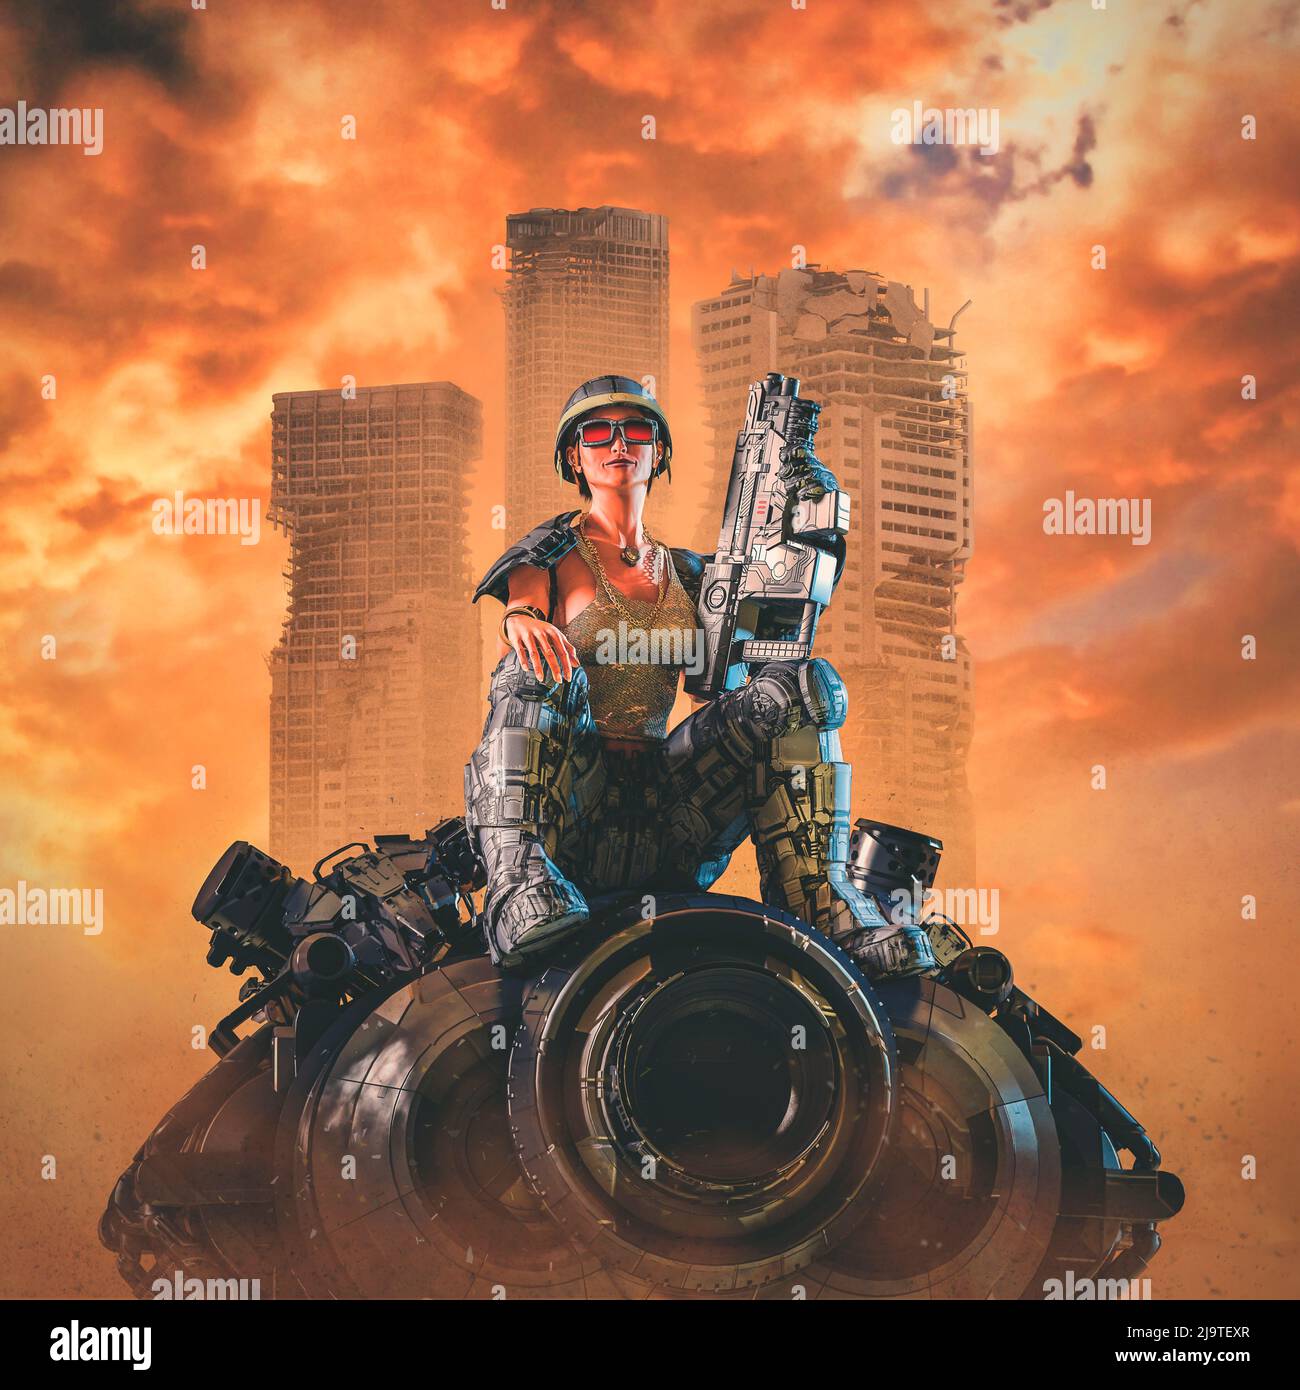 Cyberpunk soldier girl desert war - 3D illustration of science fiction military female warrior riding futuristic tank through city ruins Stock Photo